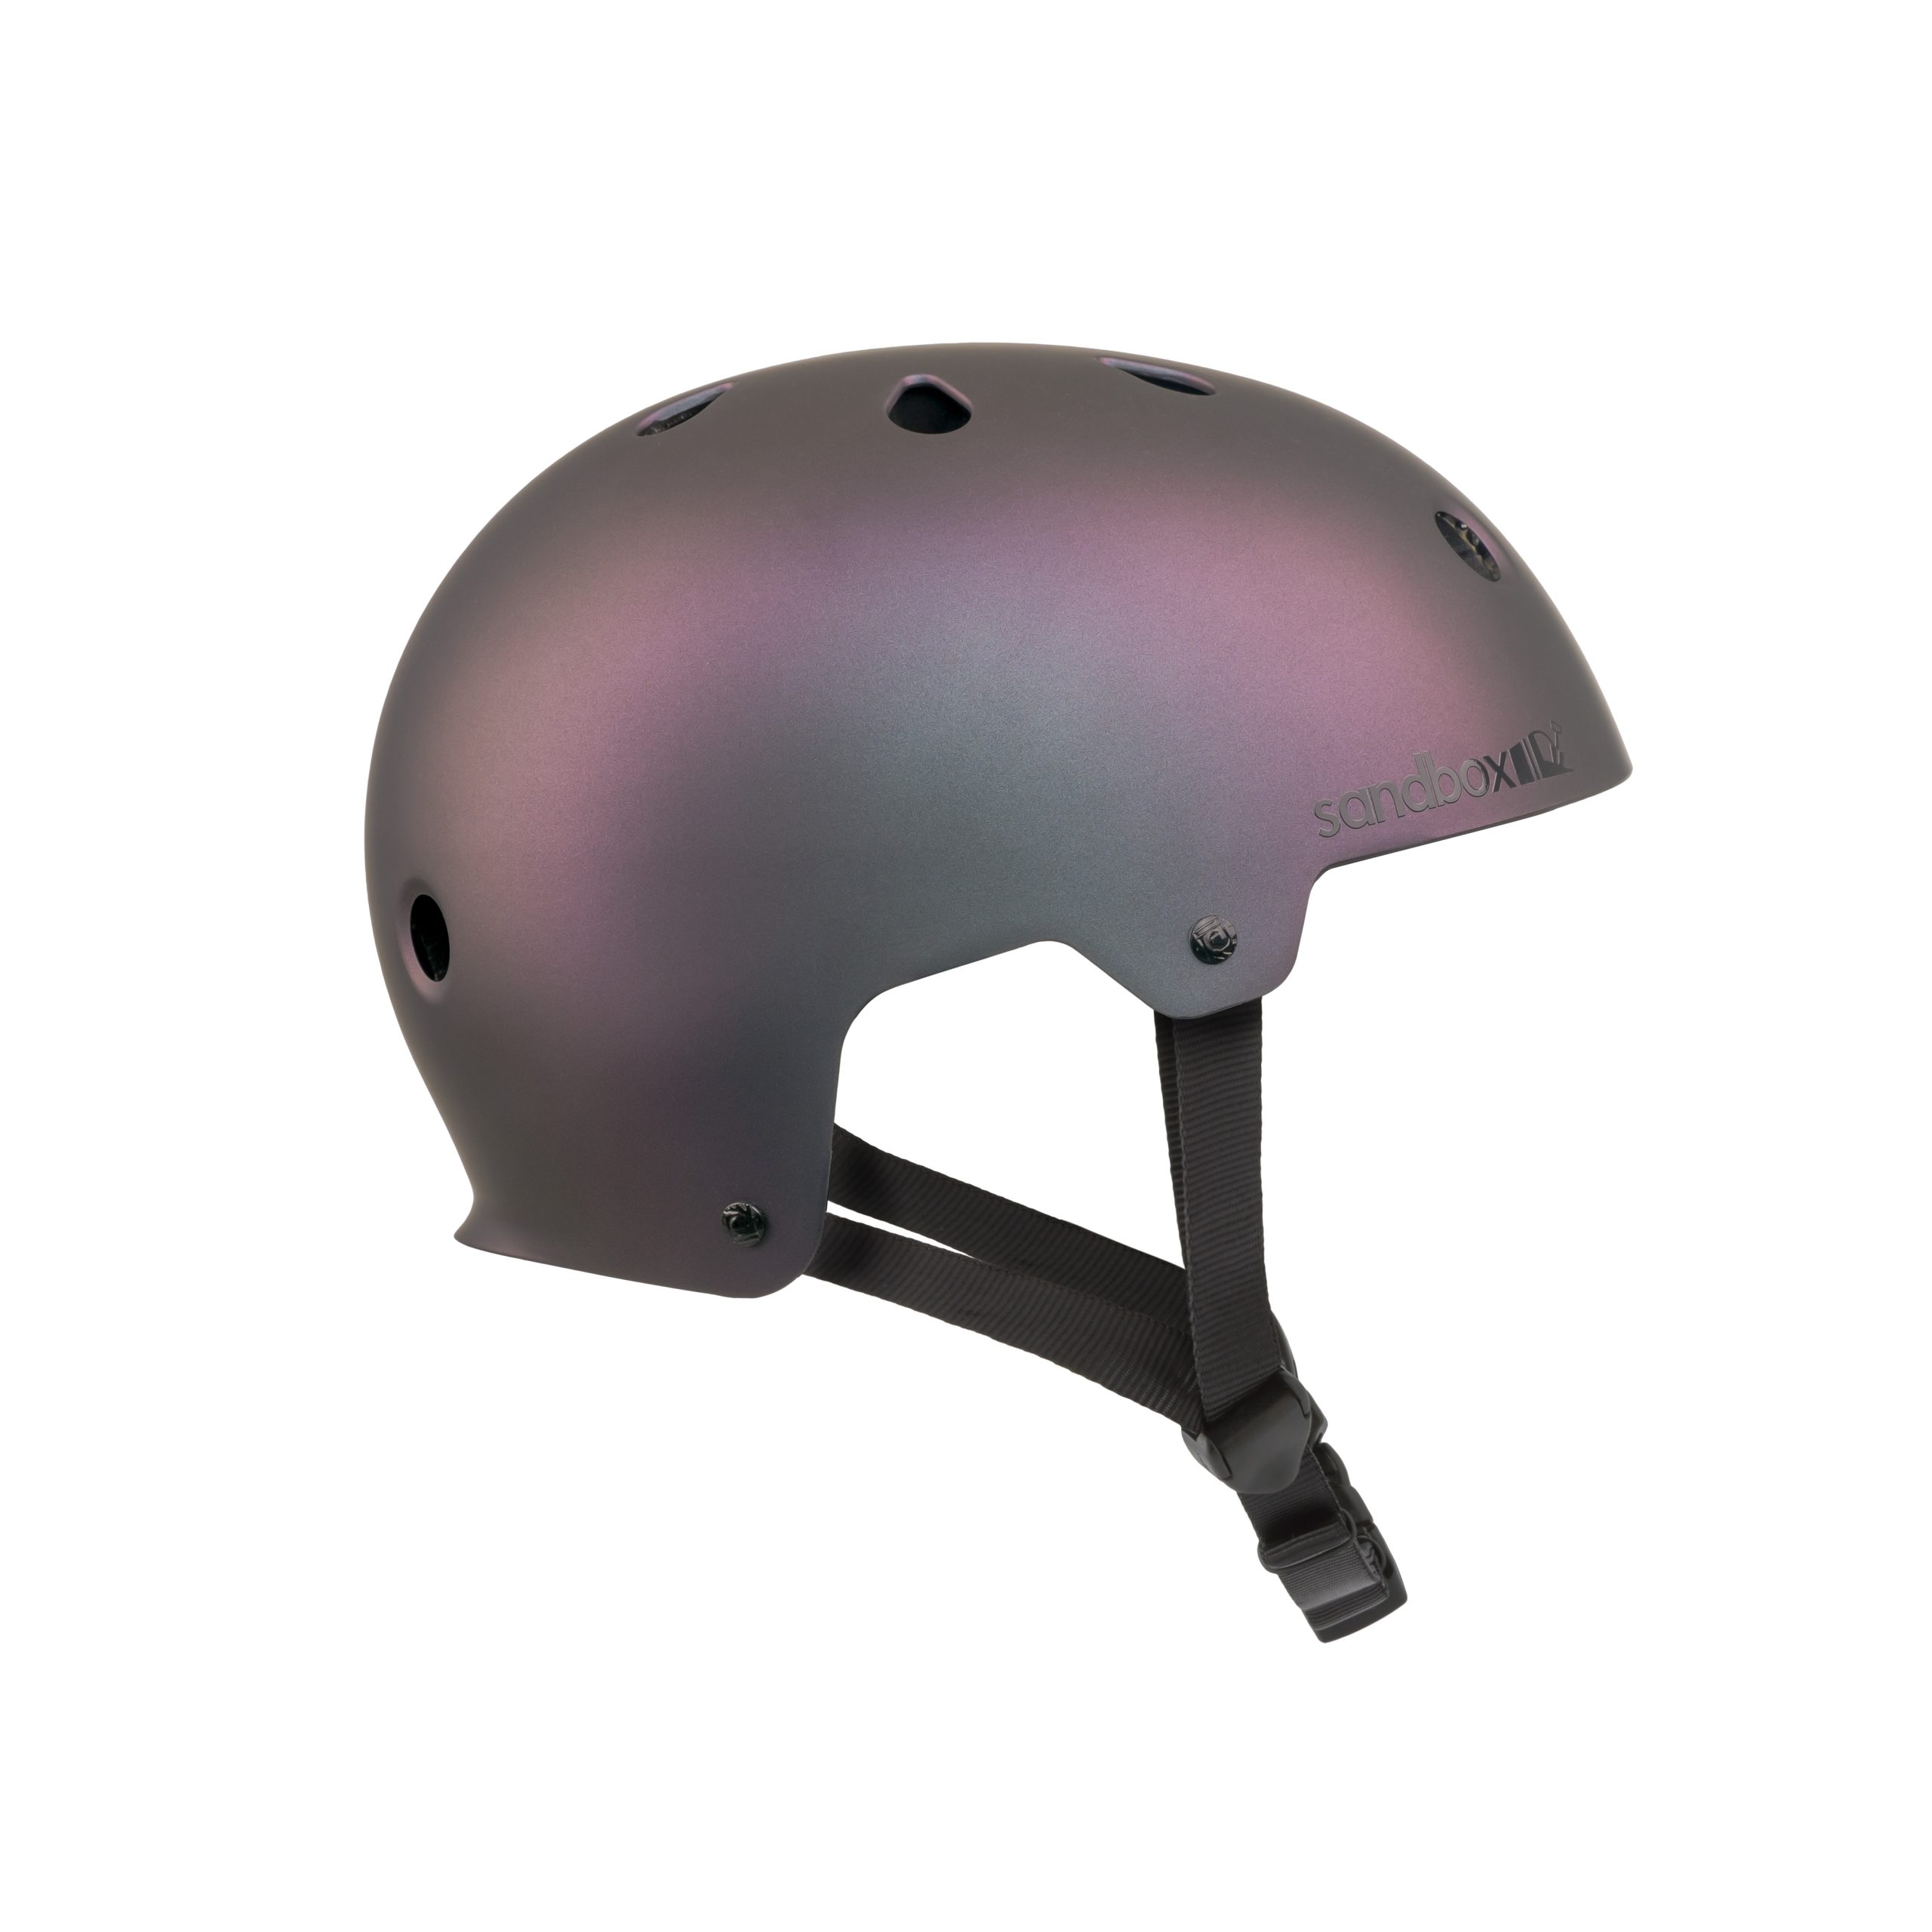 Sandbox S/S 22 Water helmets